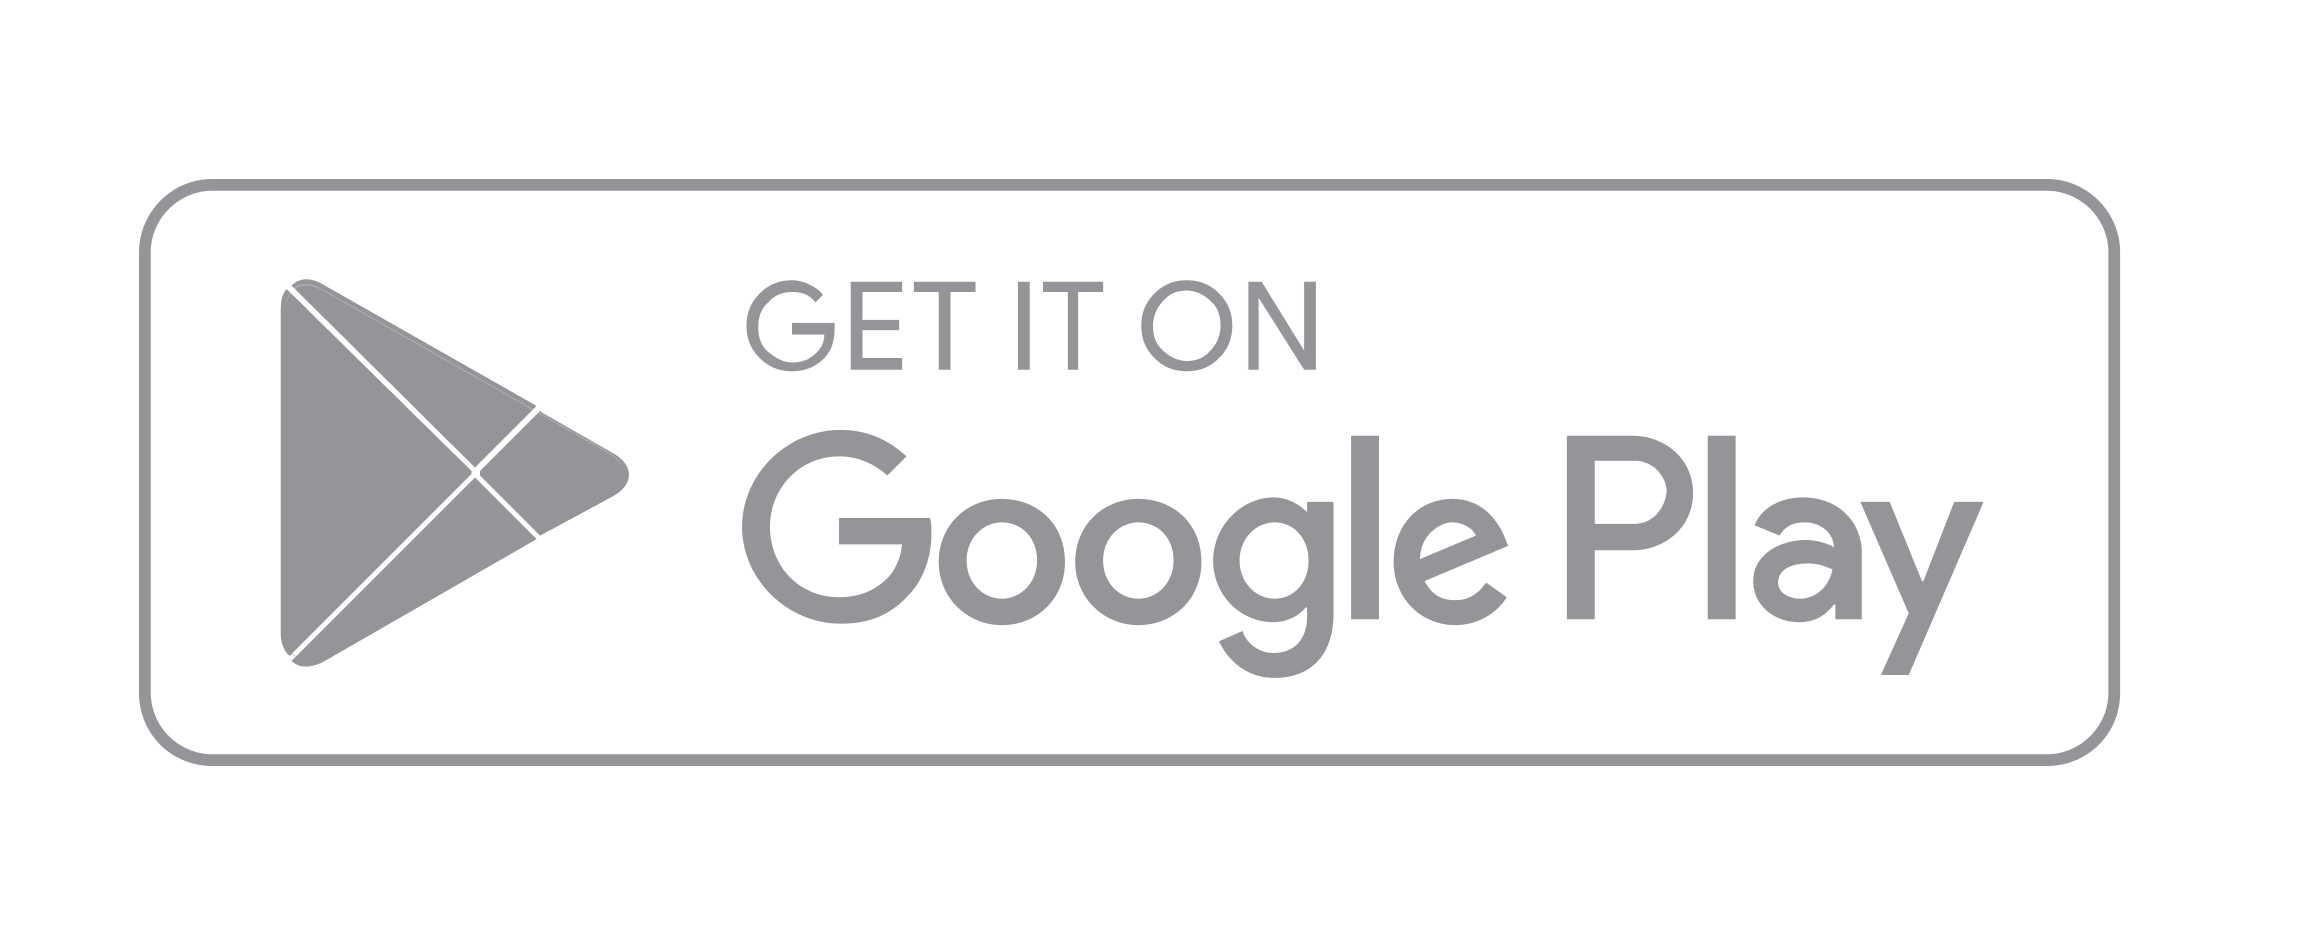 Гугл плей. Google Play logo. Get in Google Play. Доступно в Play Market. Google play отменили